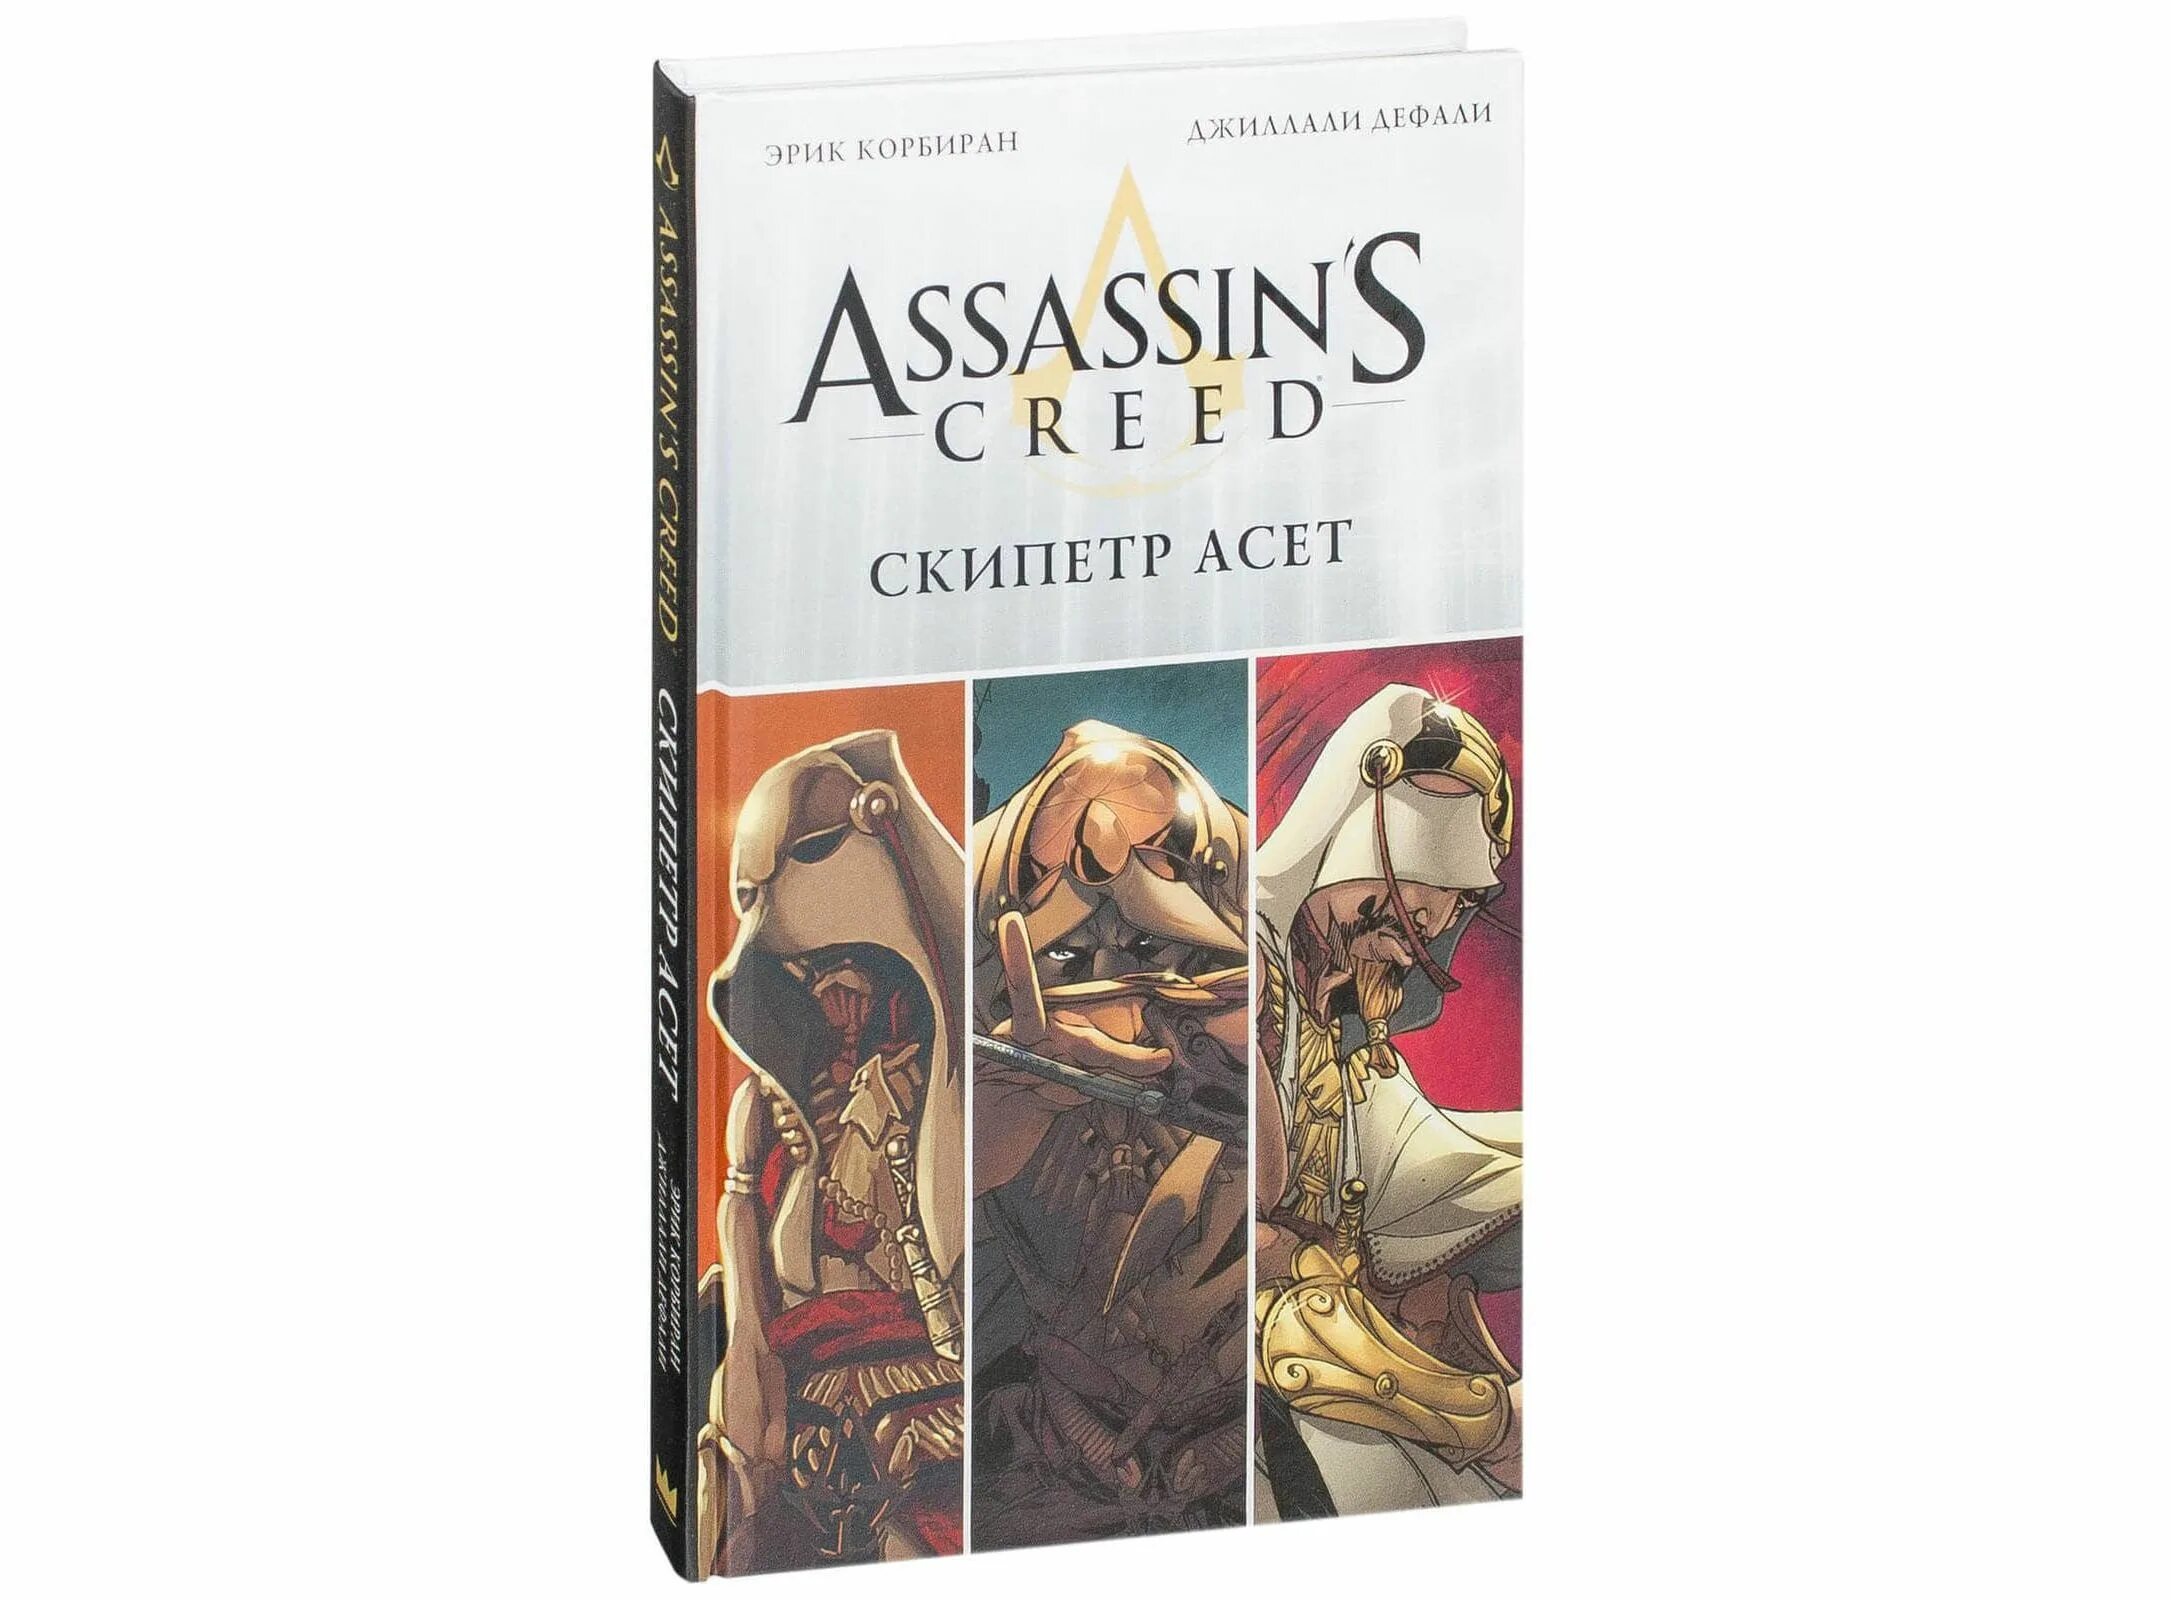 Assassin's Creed книги. Assassin's Creed комиксы. Assassin's Creed последние потомки. Ассасин комиксы. Комиксы ассасин крид